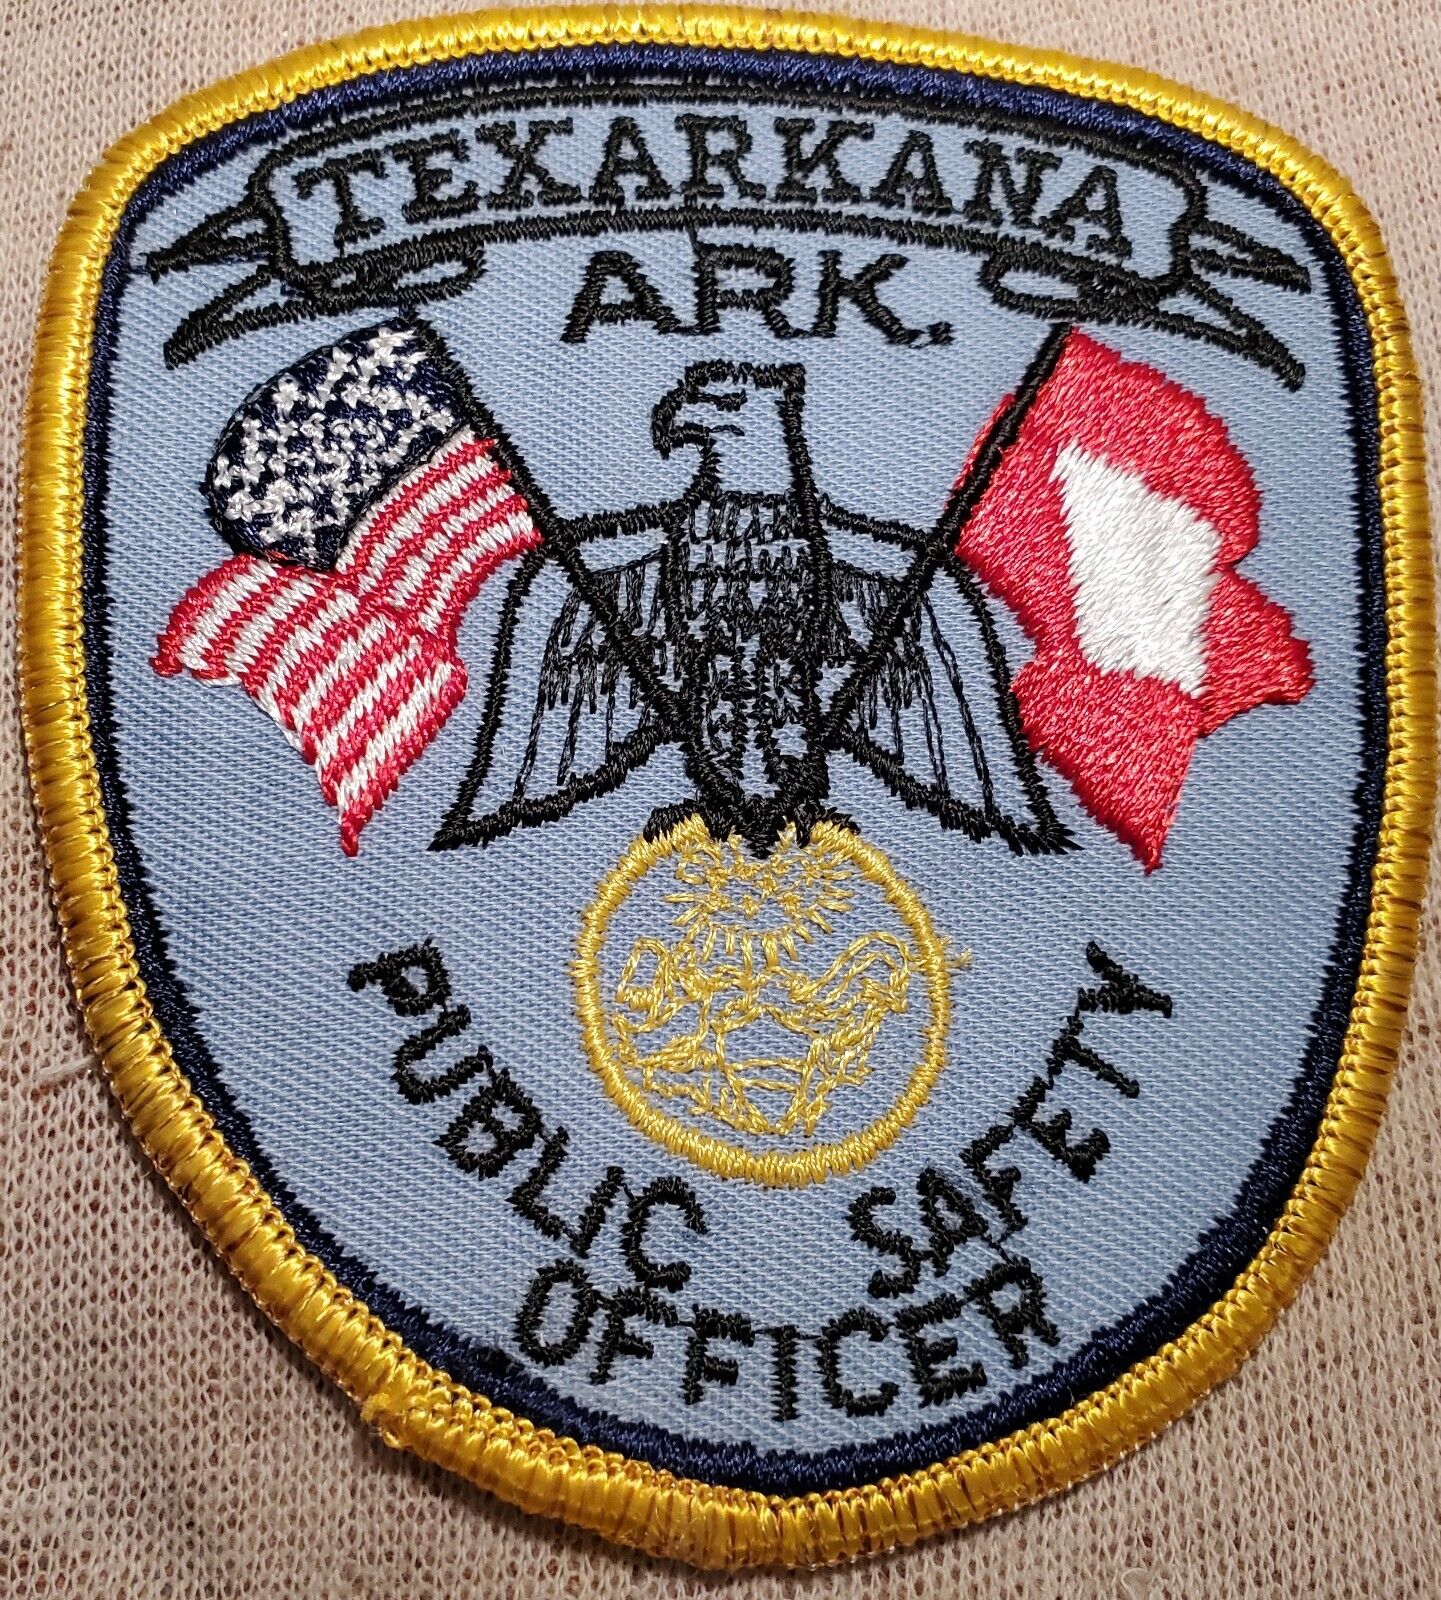 AR Vintage Texarkana Arkansas Public Safety Officer Shoulder Patch